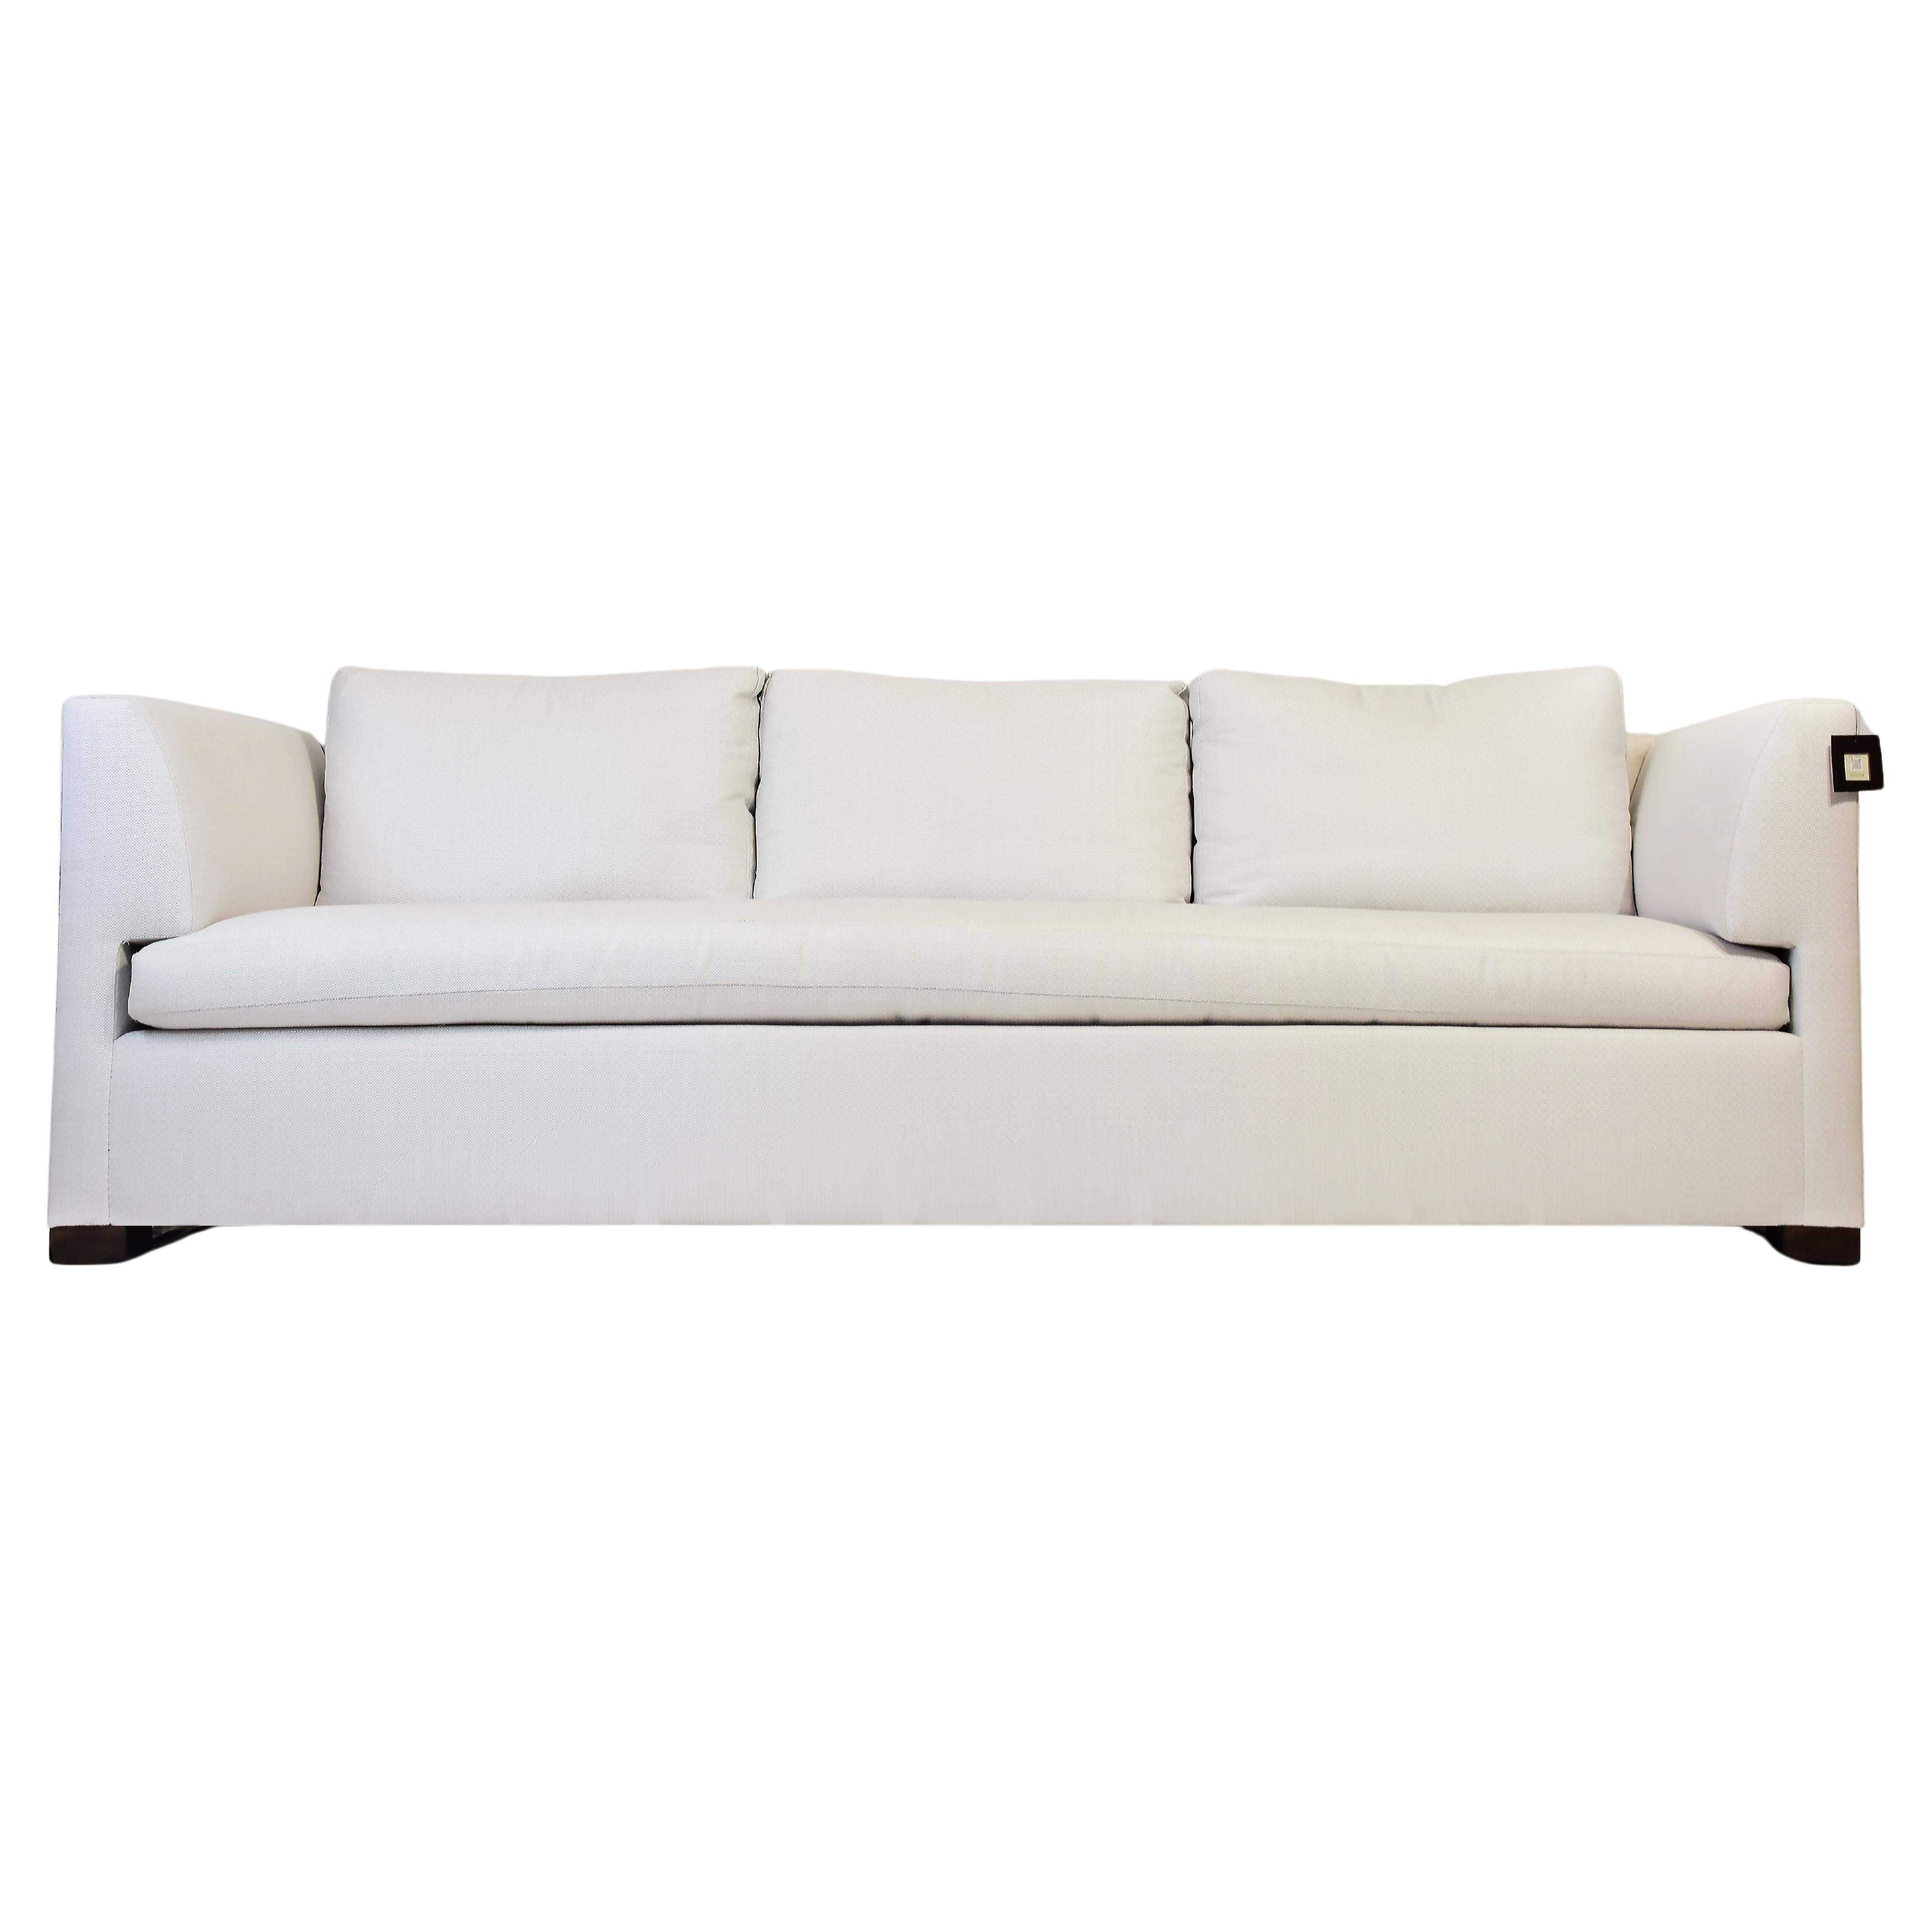 Le Jeune Upholstery Ashley 3 Seat Sofa in Light Gray Floor Model